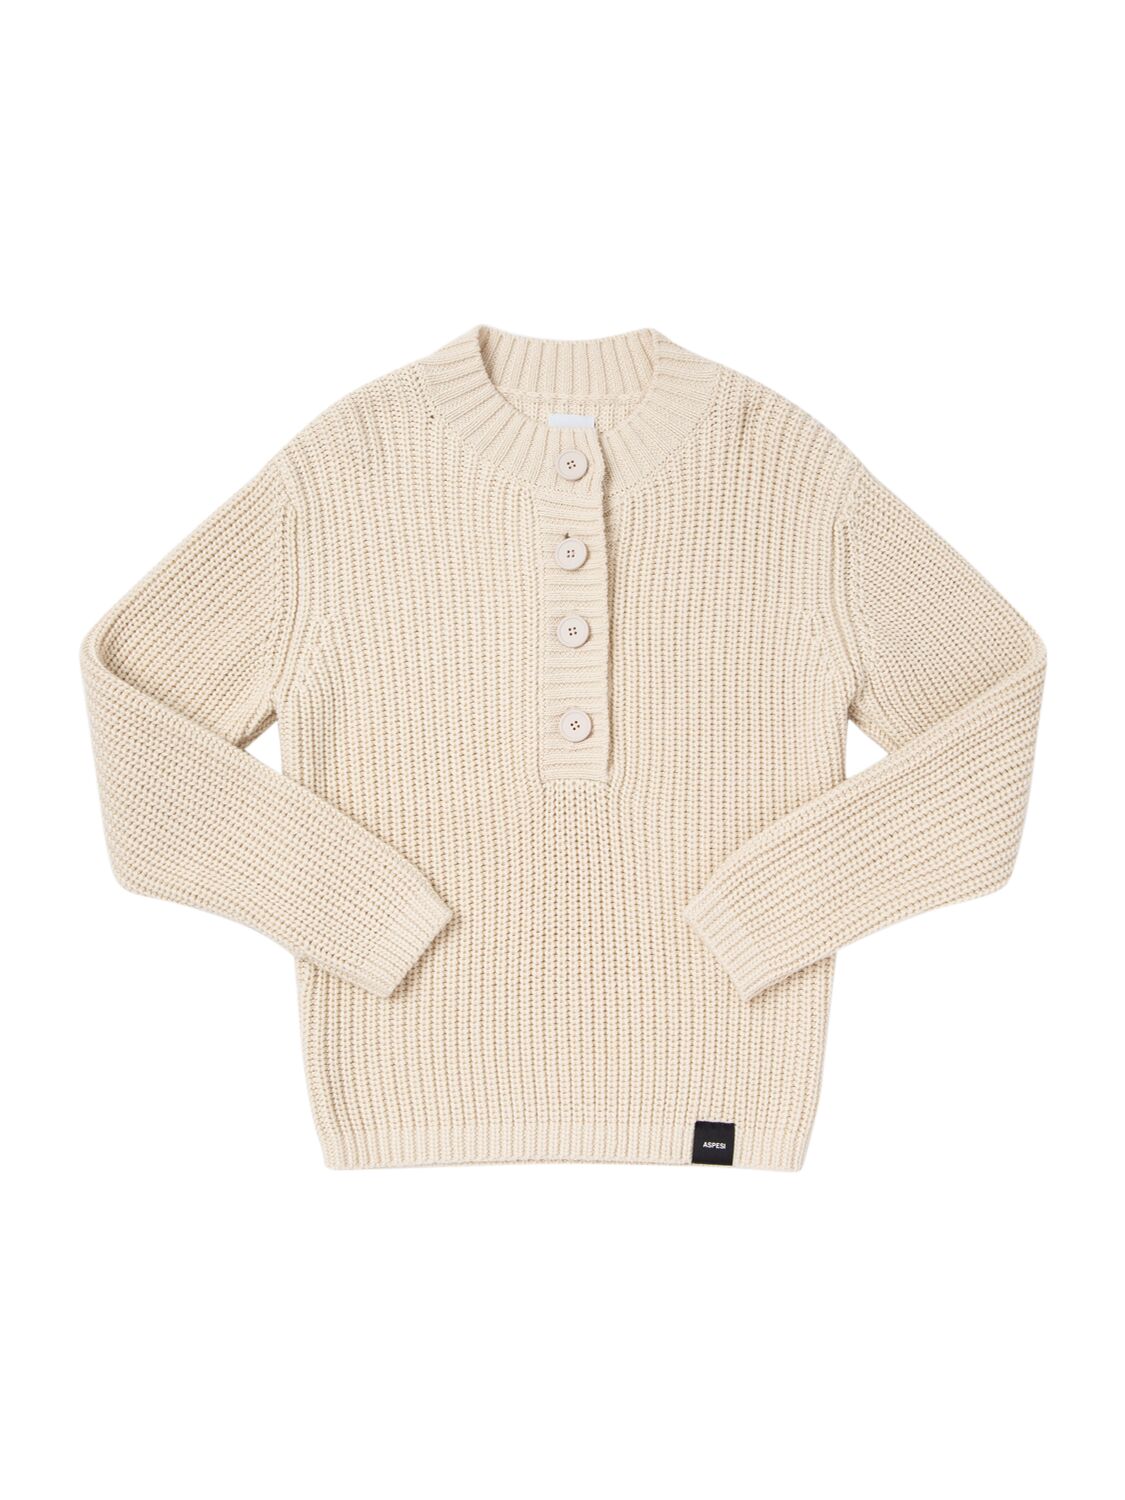 Aspesi Cotton Knit Sweater In Neutral